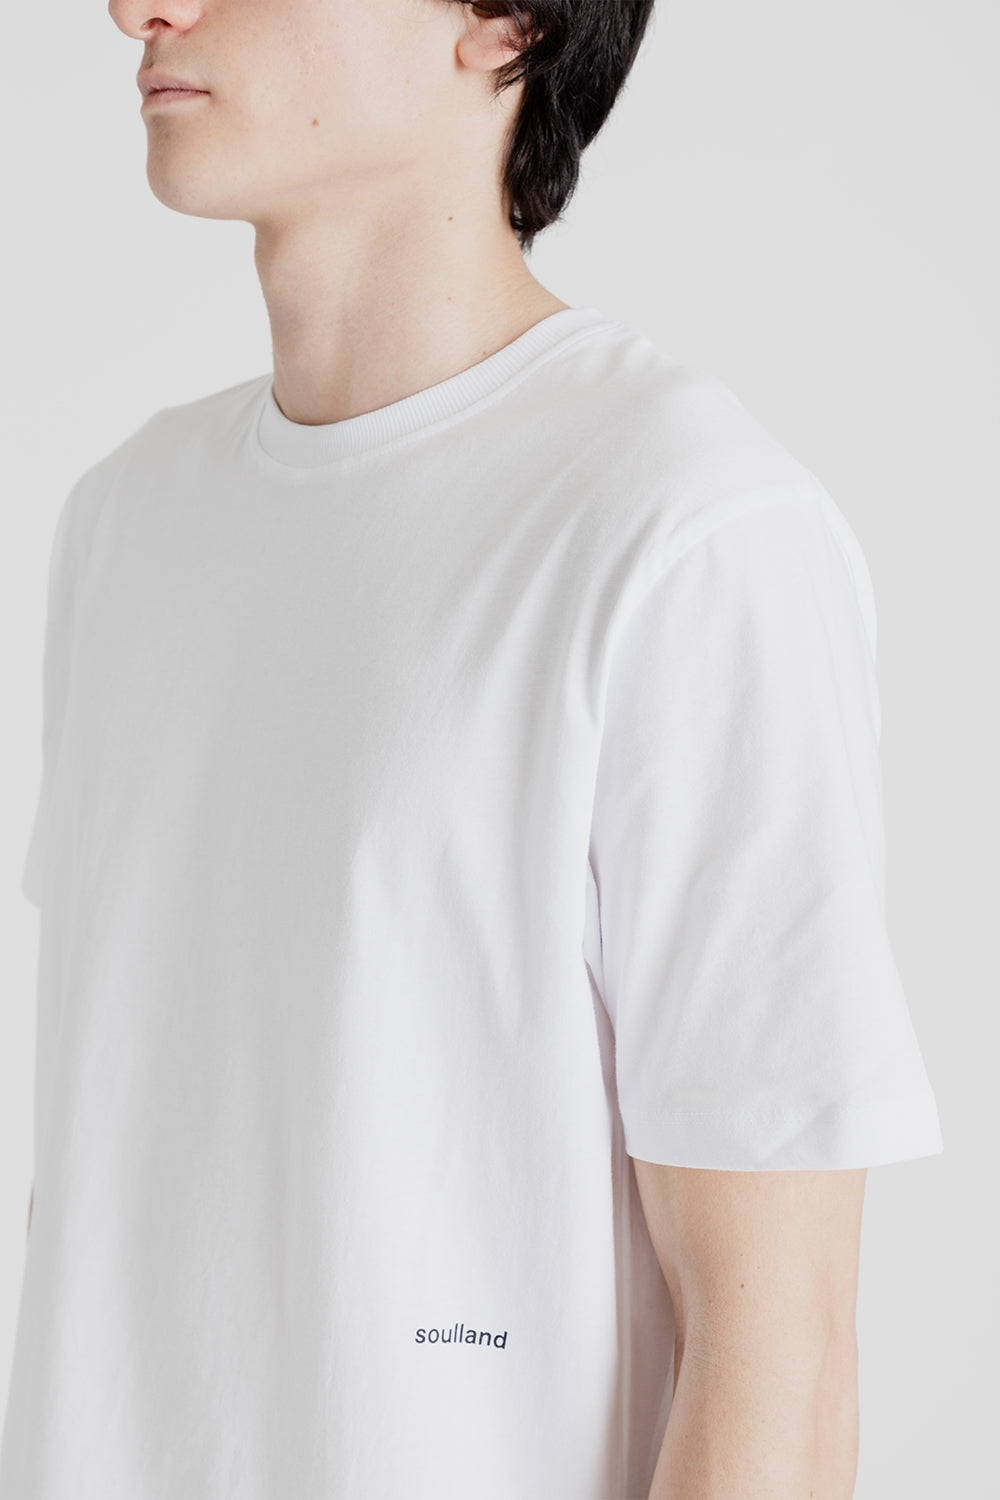 soulland_logic_coffey_tee_shirt_white_4